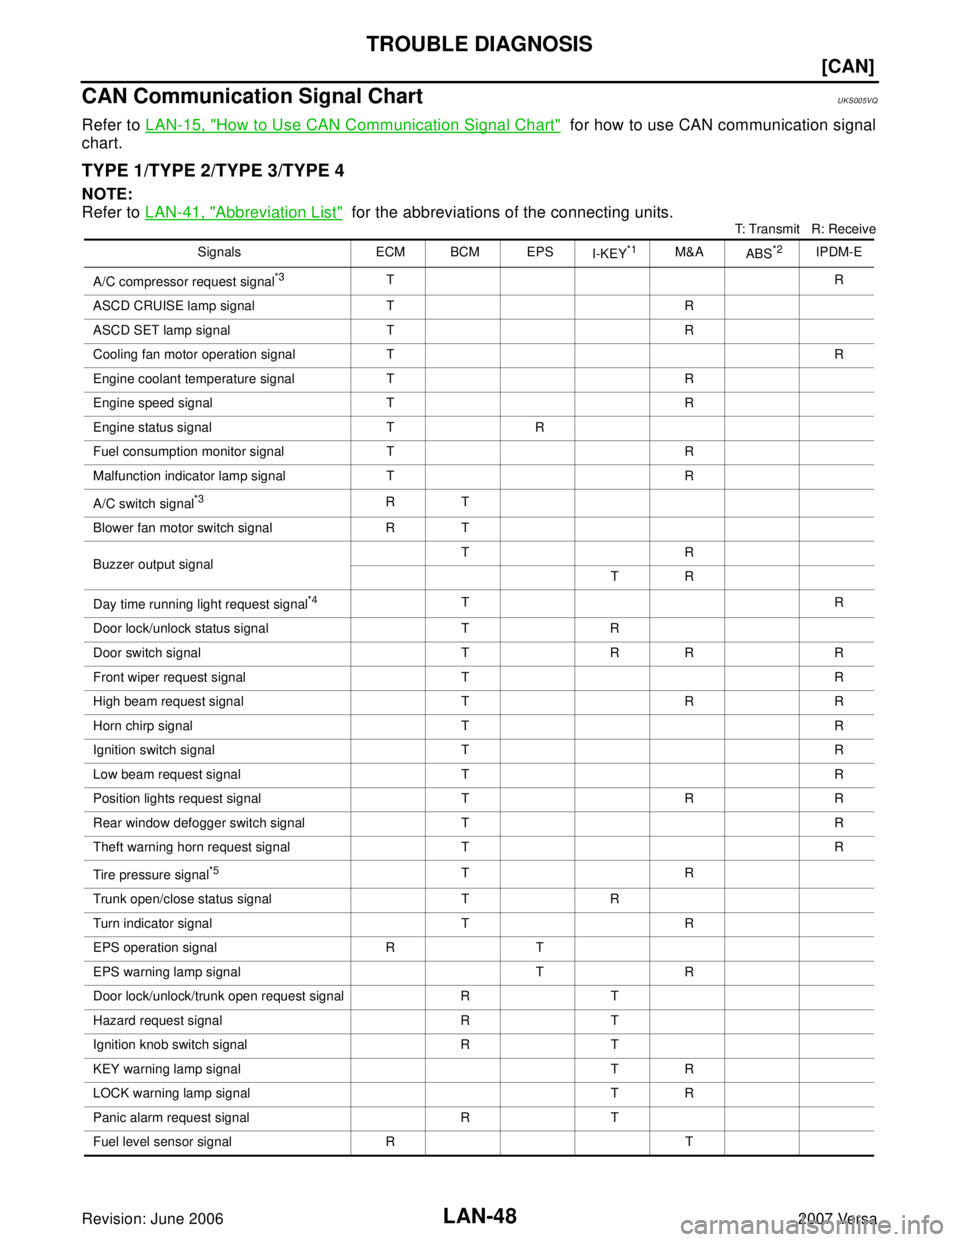 NISSAN VERSA 2006  Workshop  Service Repair Manual LAN-48
[CAN]
TROUBLE DIAGNOSIS
Revision: June 20062007 Versa
CAN Communication Signal ChartUKS005VQ
Refer to LAN-15, "How to Use CAN Communication Signal Chart"  for how to use CAN communication signa